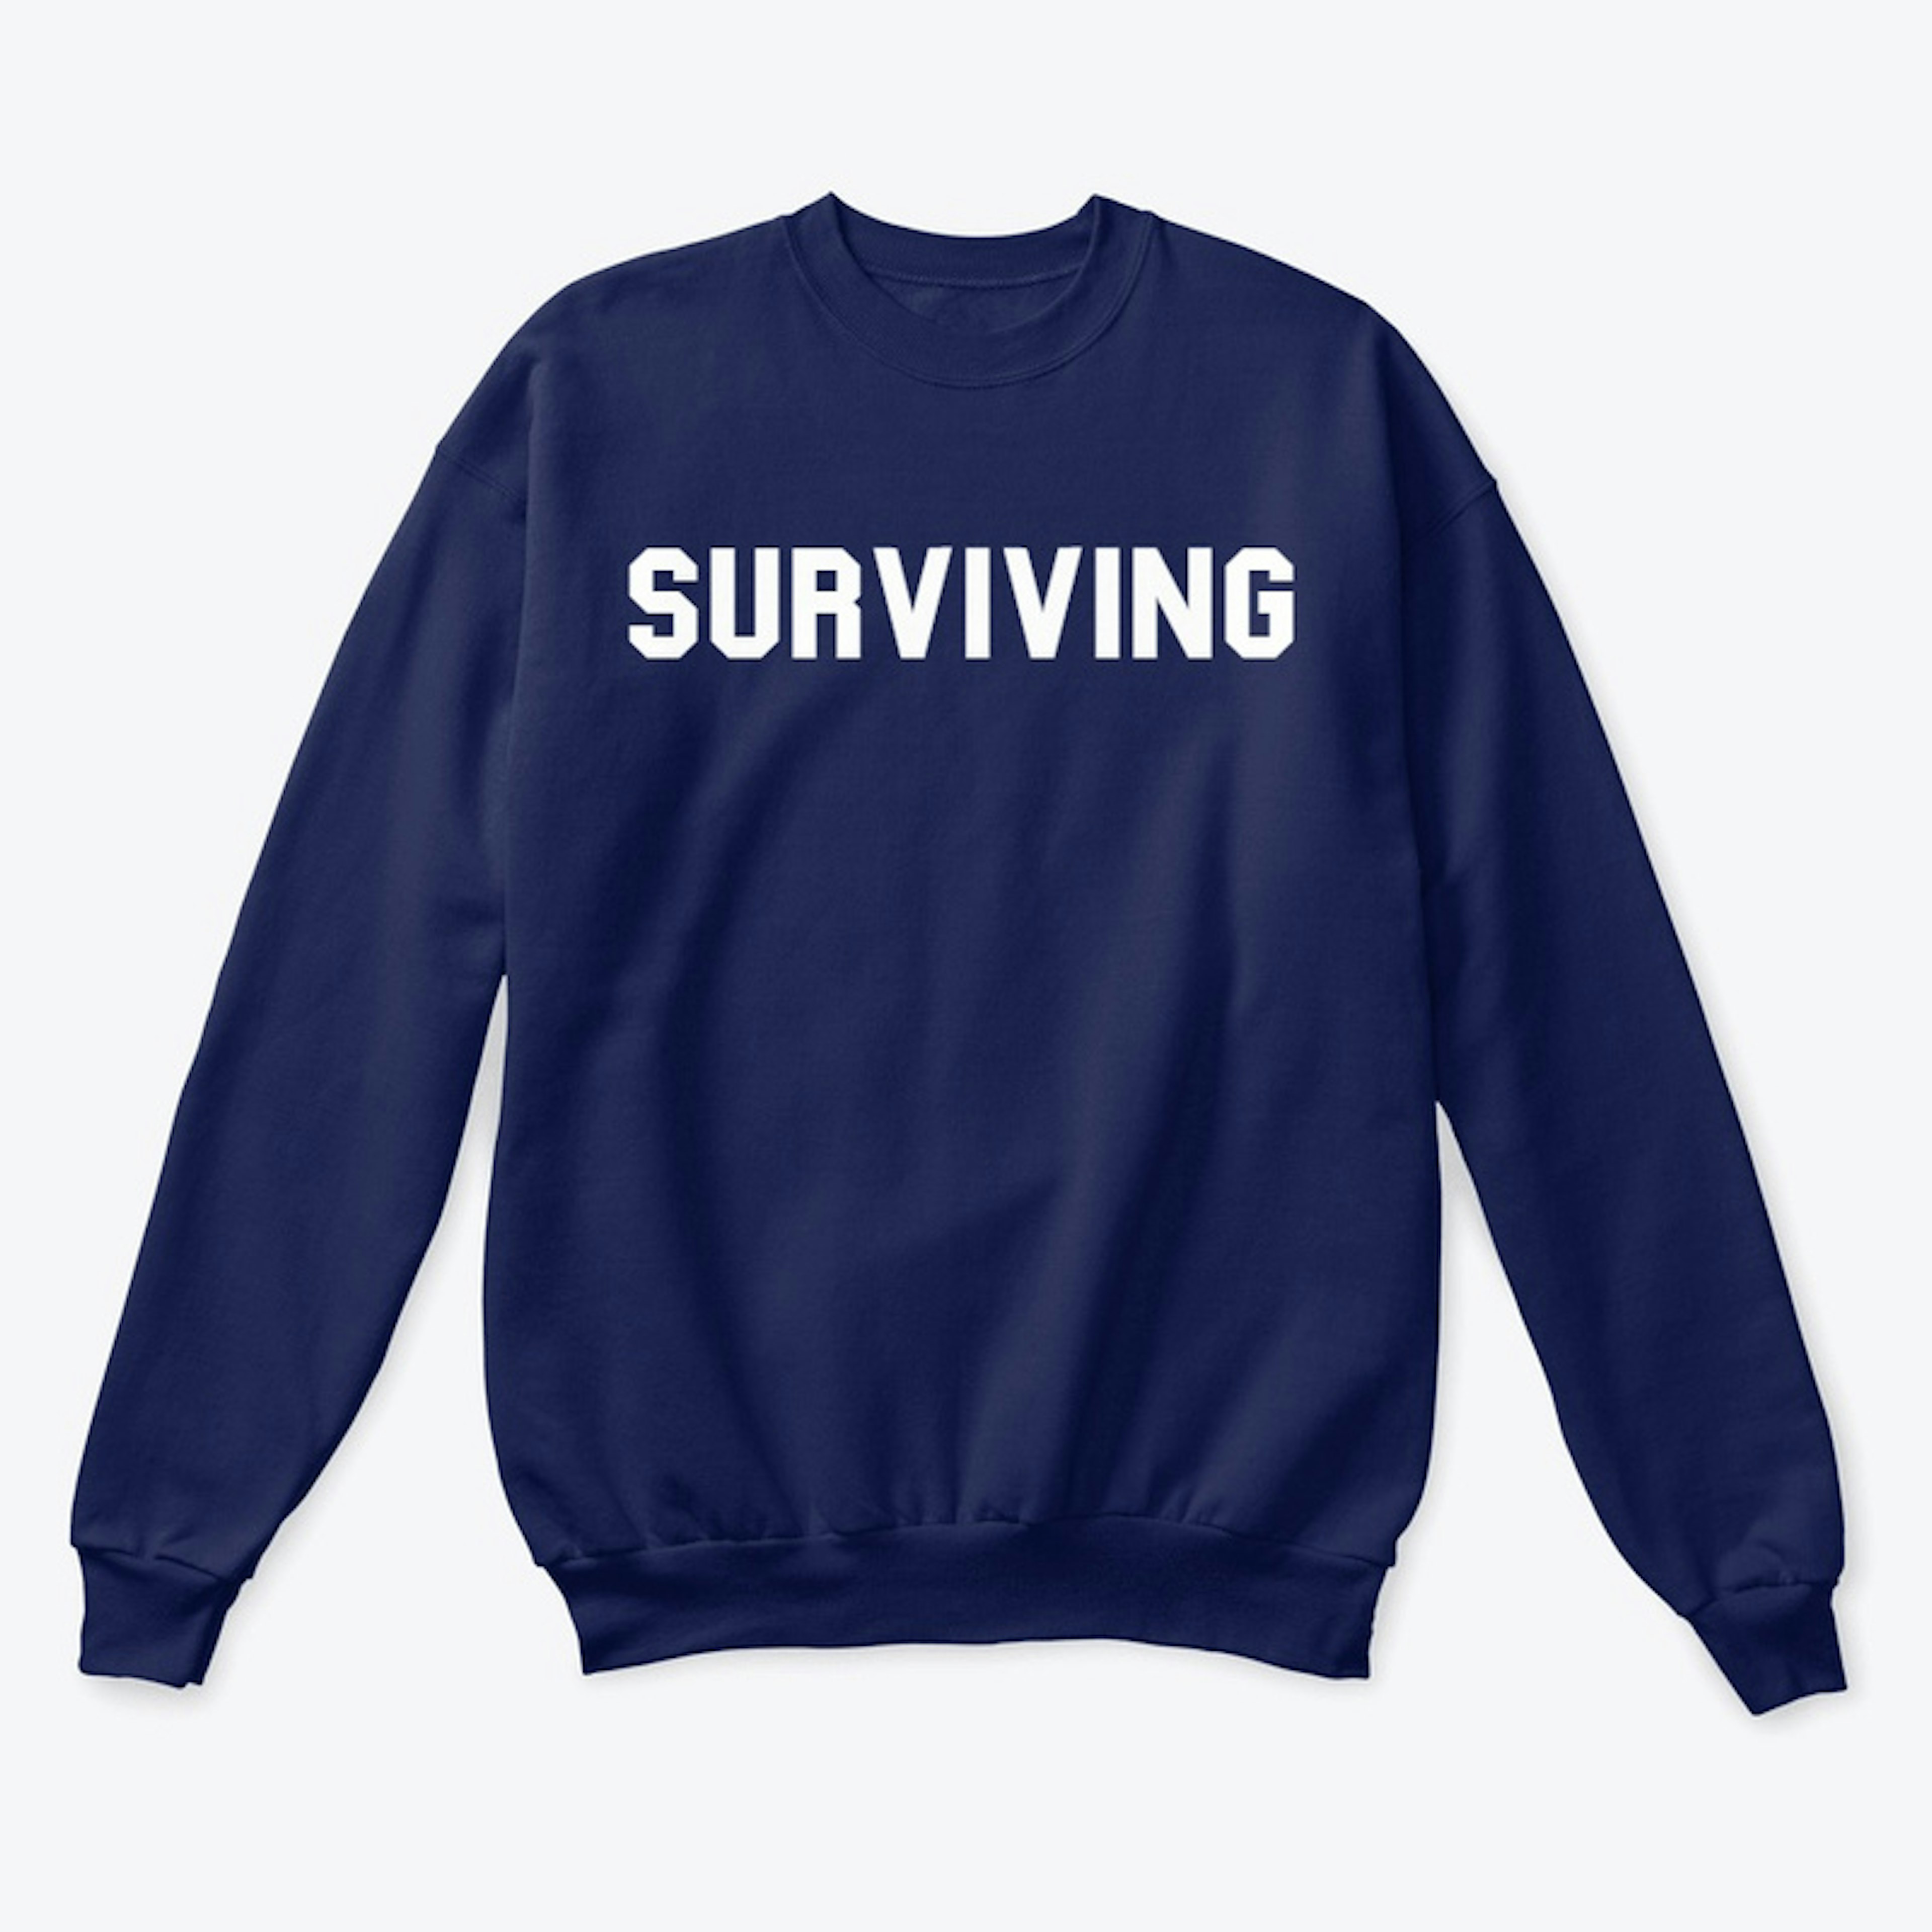 SURVIVING sweater